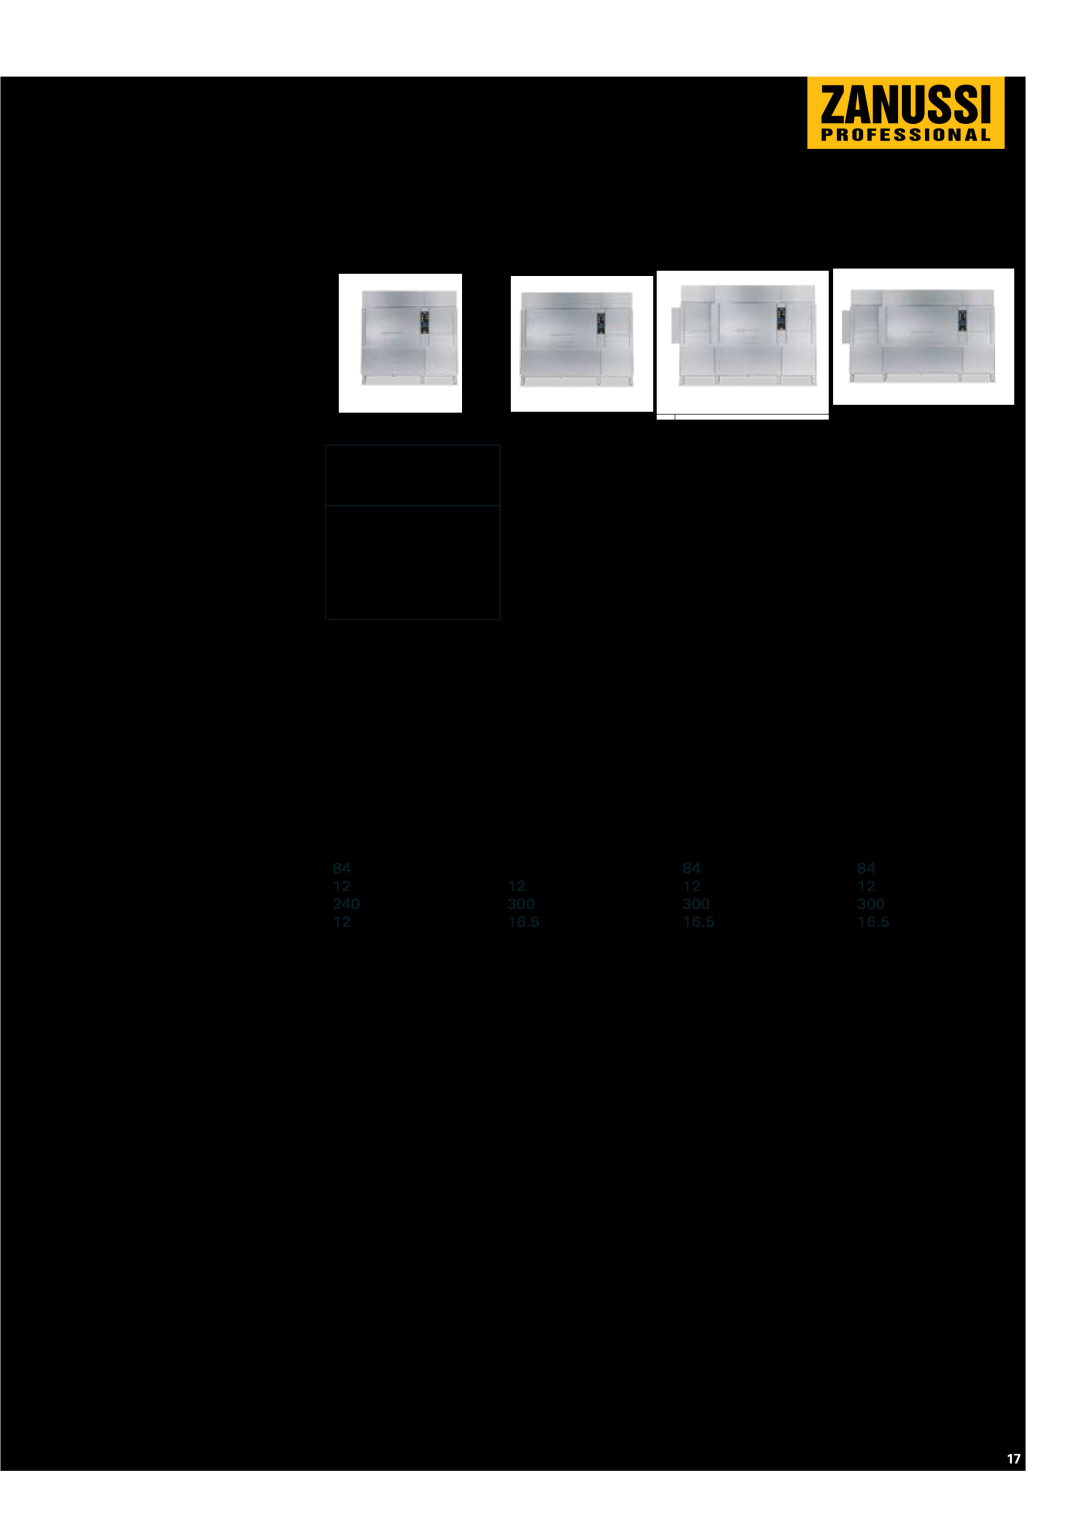 Zanussi RTCS 140, Snack 600, N 700, RTM 140, RTM 200, RTM 165 modular rack type dishwasher, Range, Optional Accessory, 16.5 